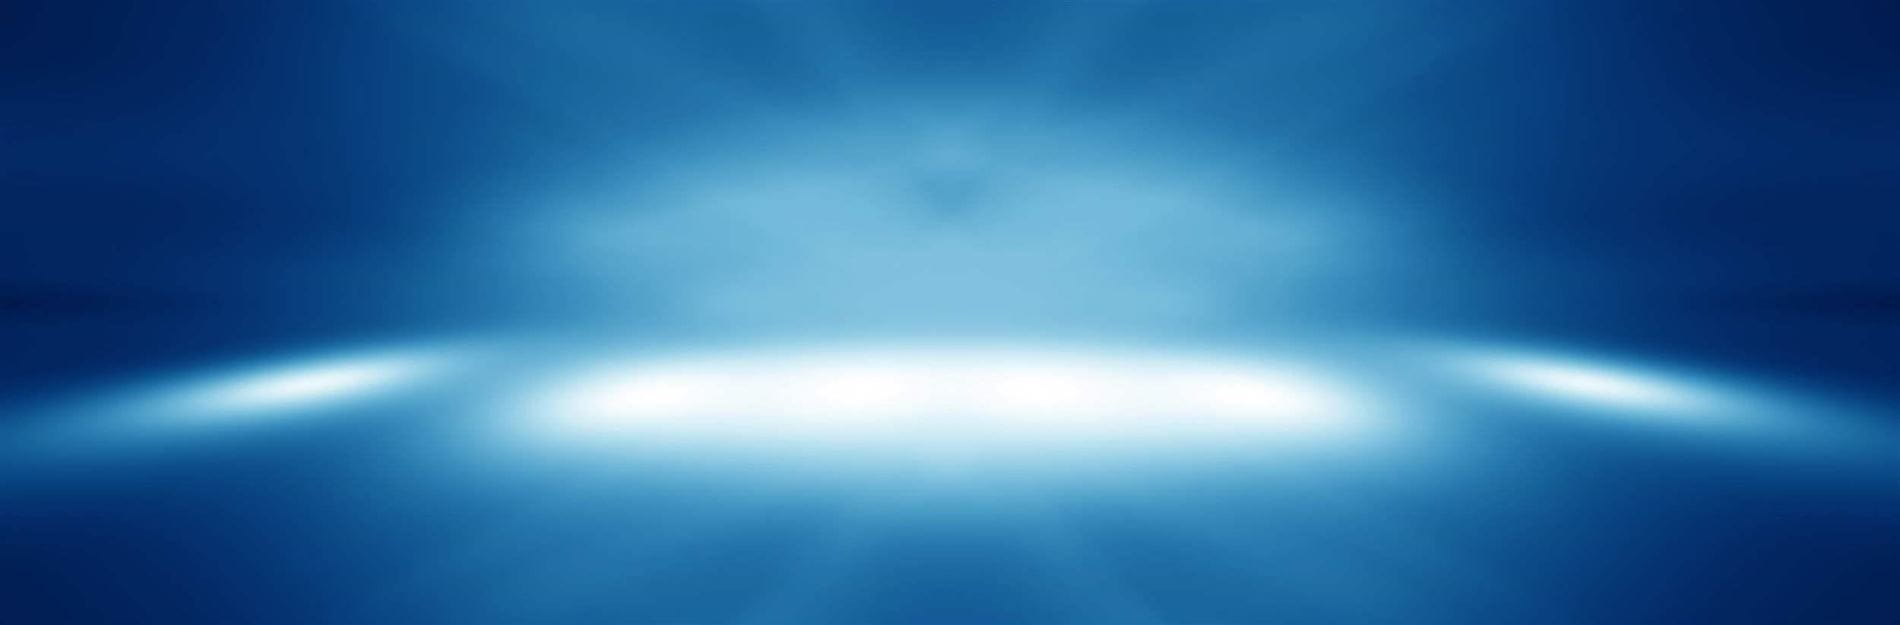 blue-blank-room-studio-gradient-with-spotlight